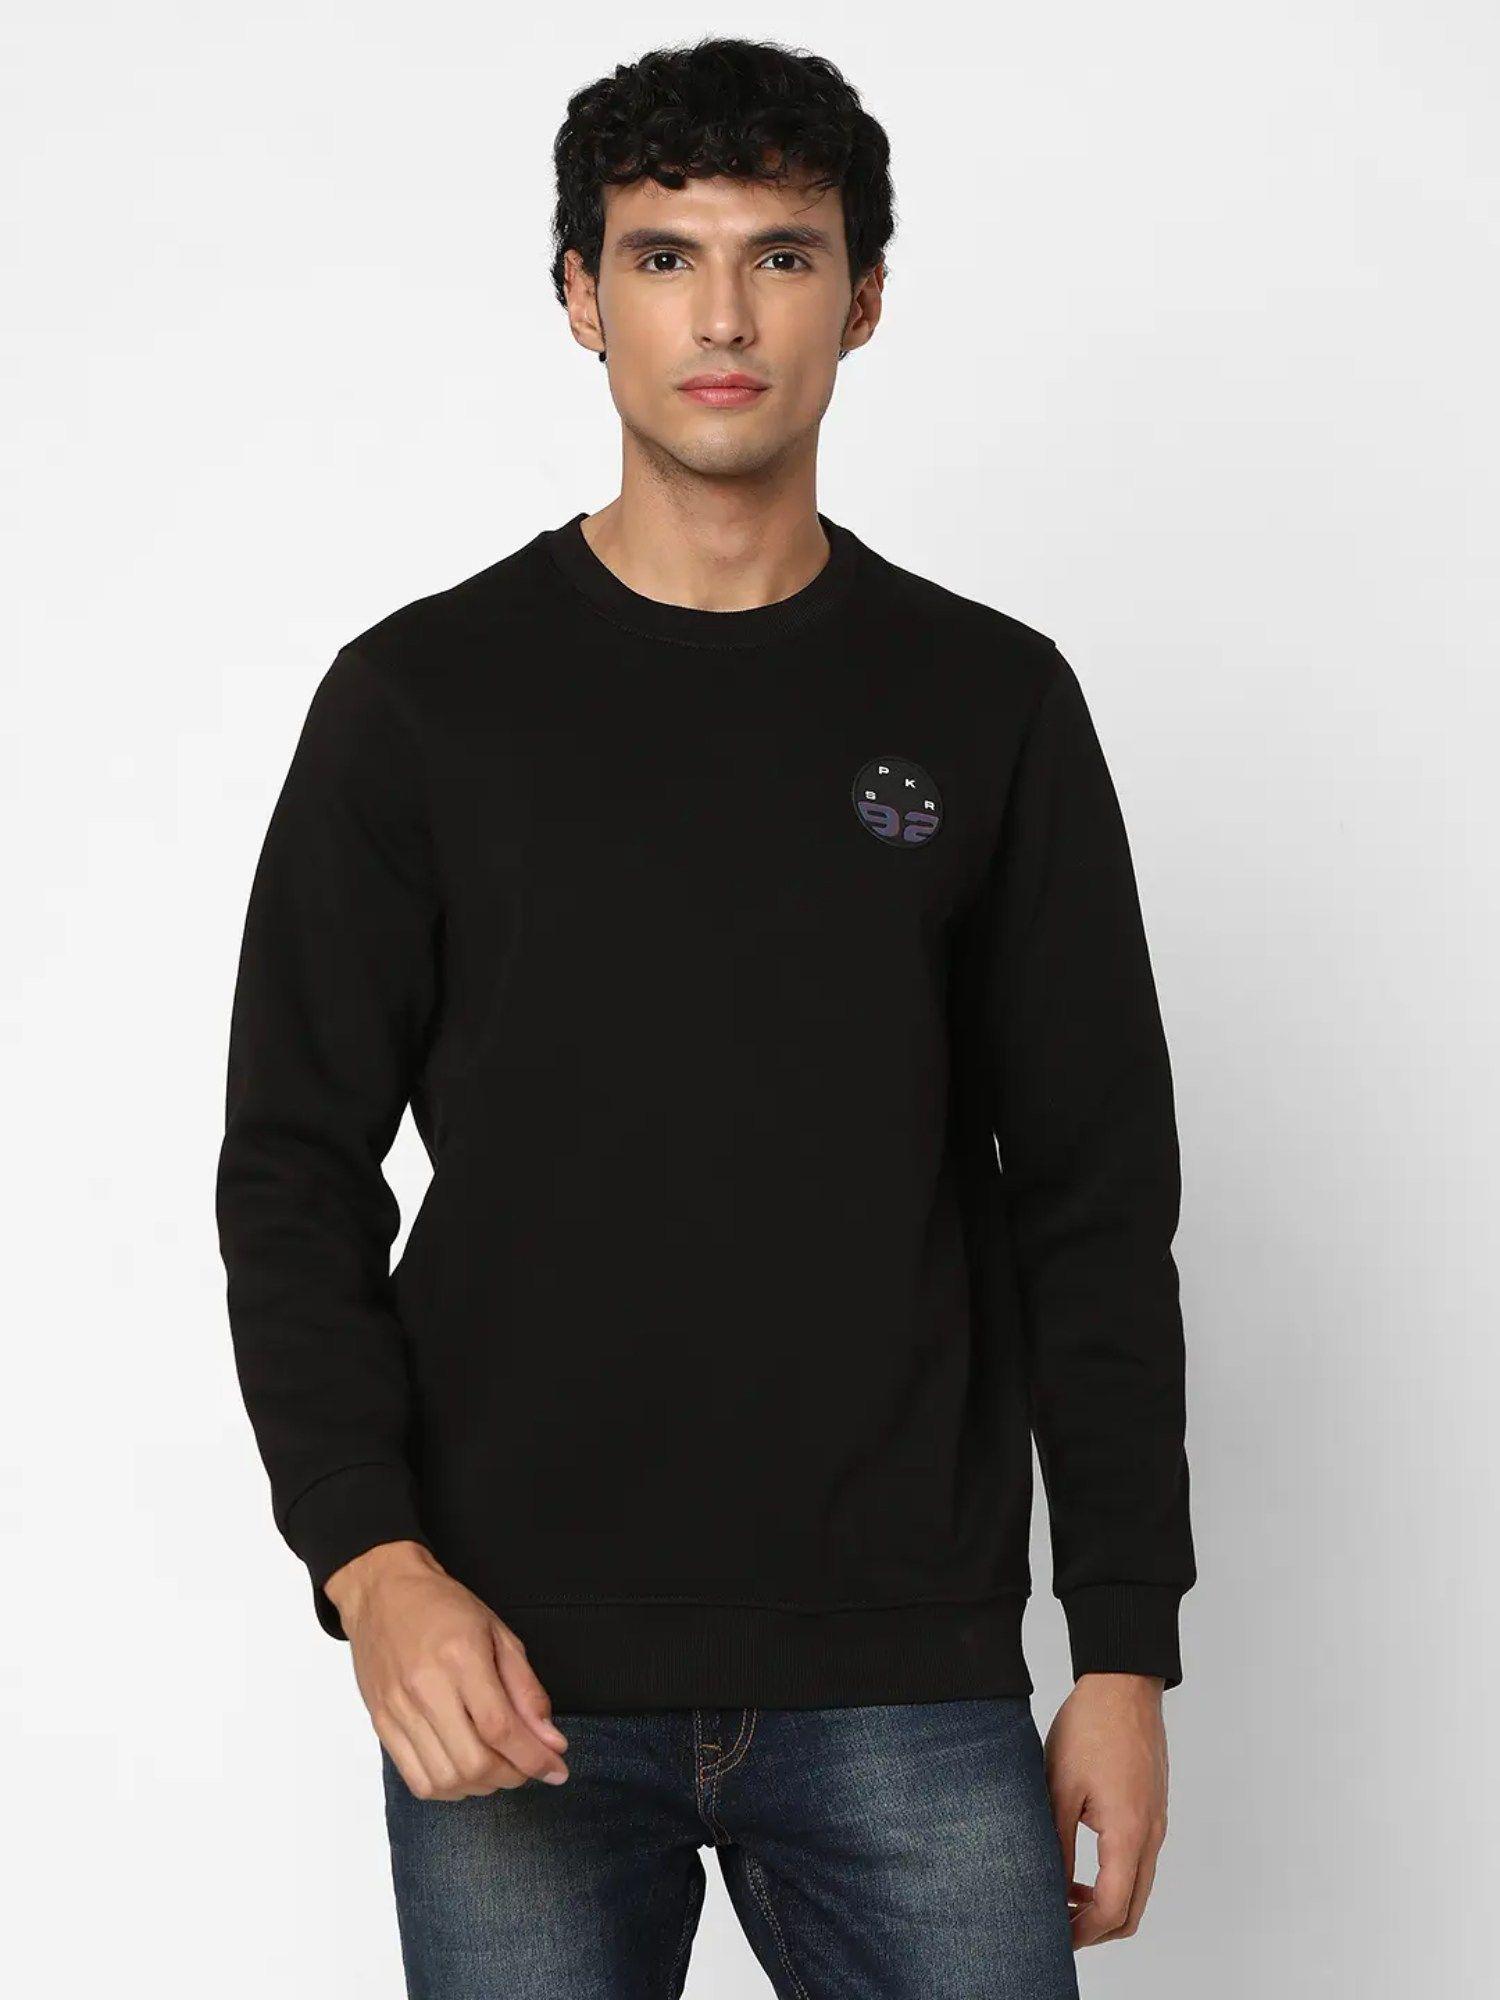 men-black-slim-fit-full-sleeve-round-neck-plain-casual-sweatshirt